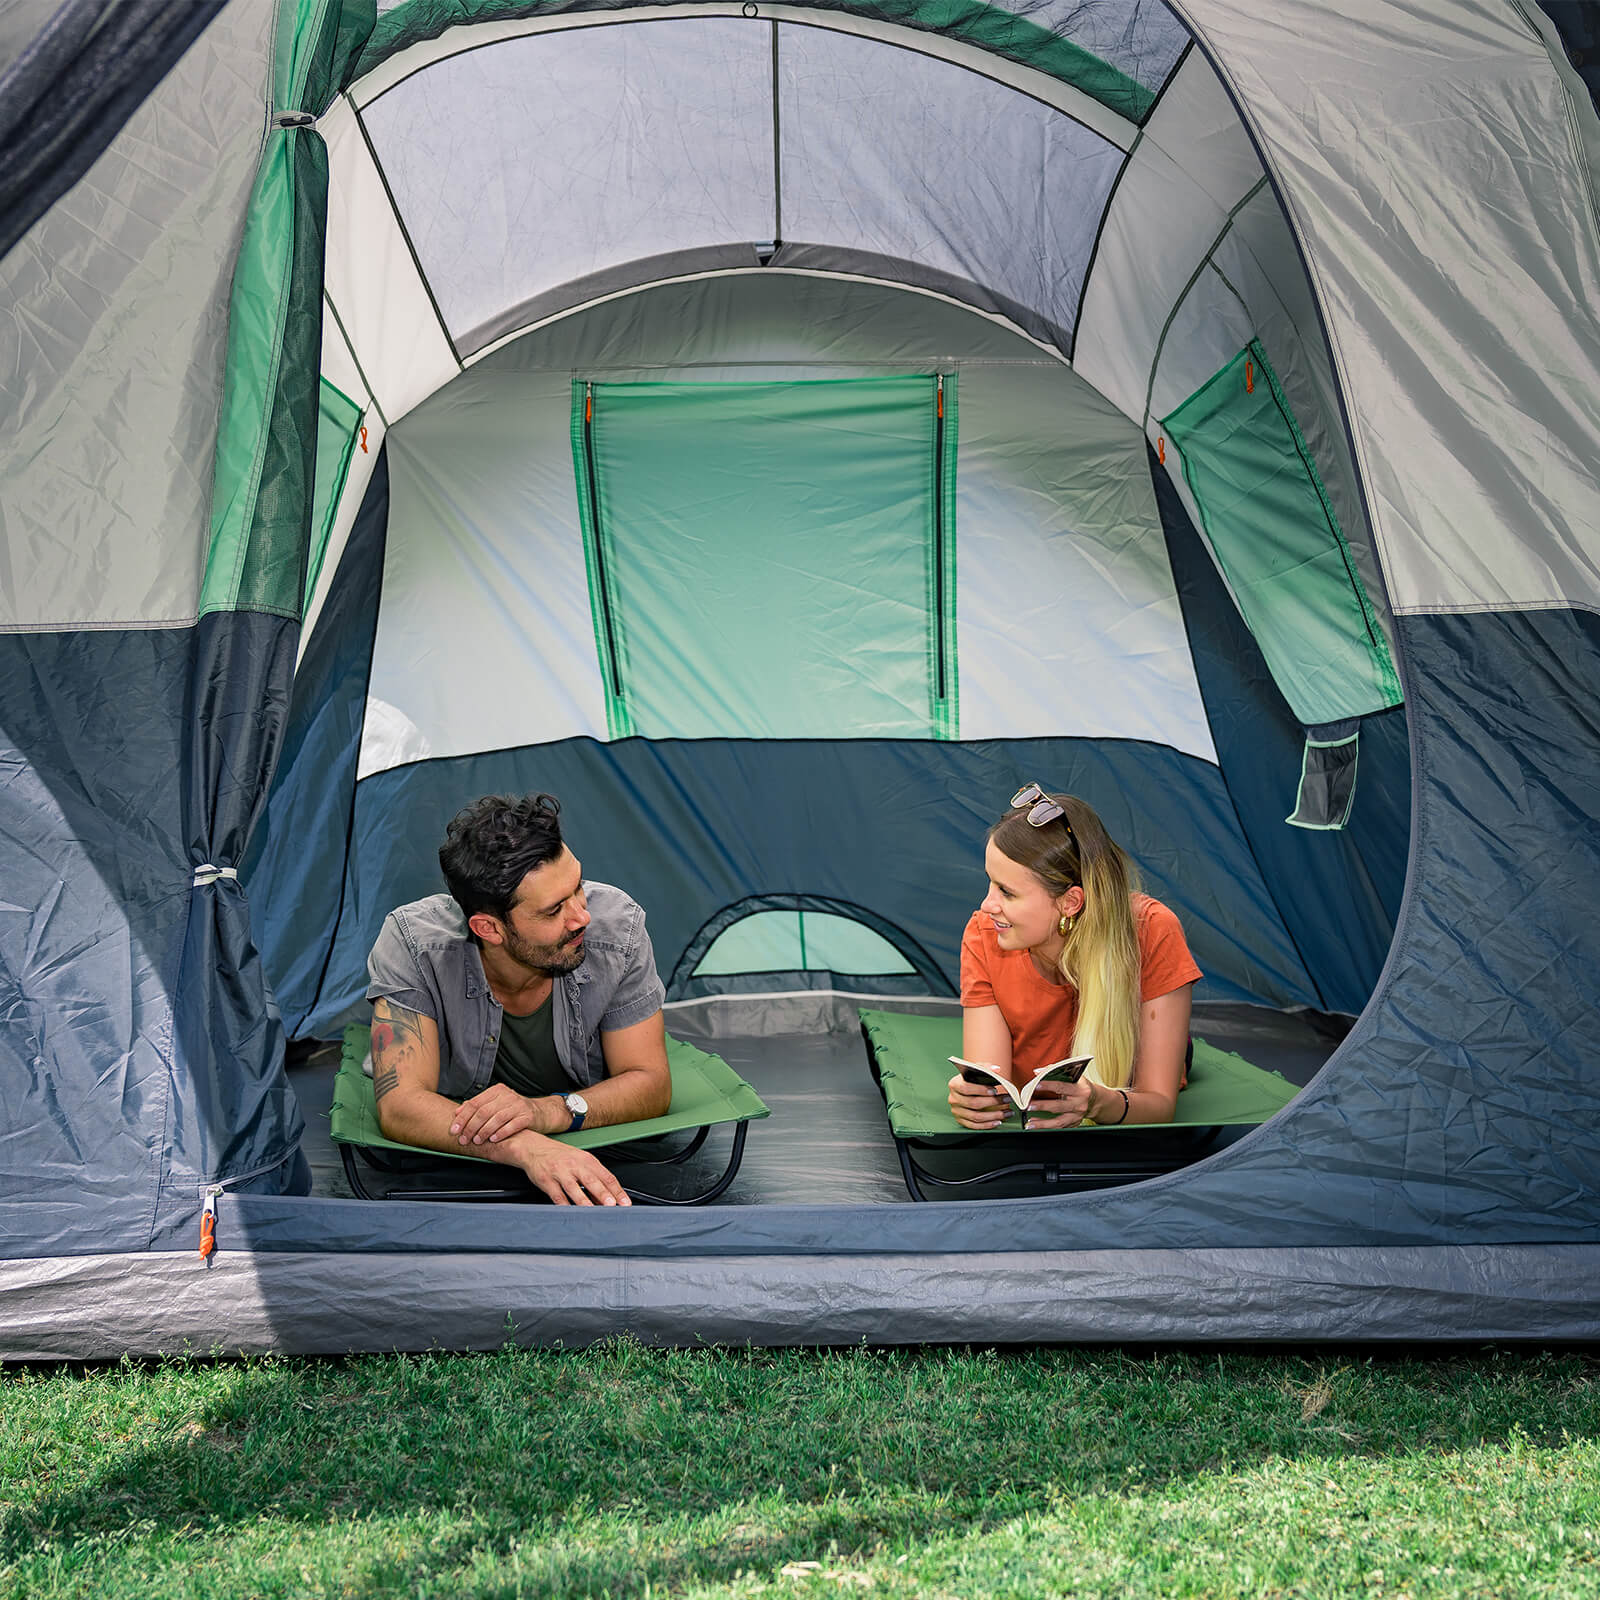 EverAdvanced Compact Camping Cot